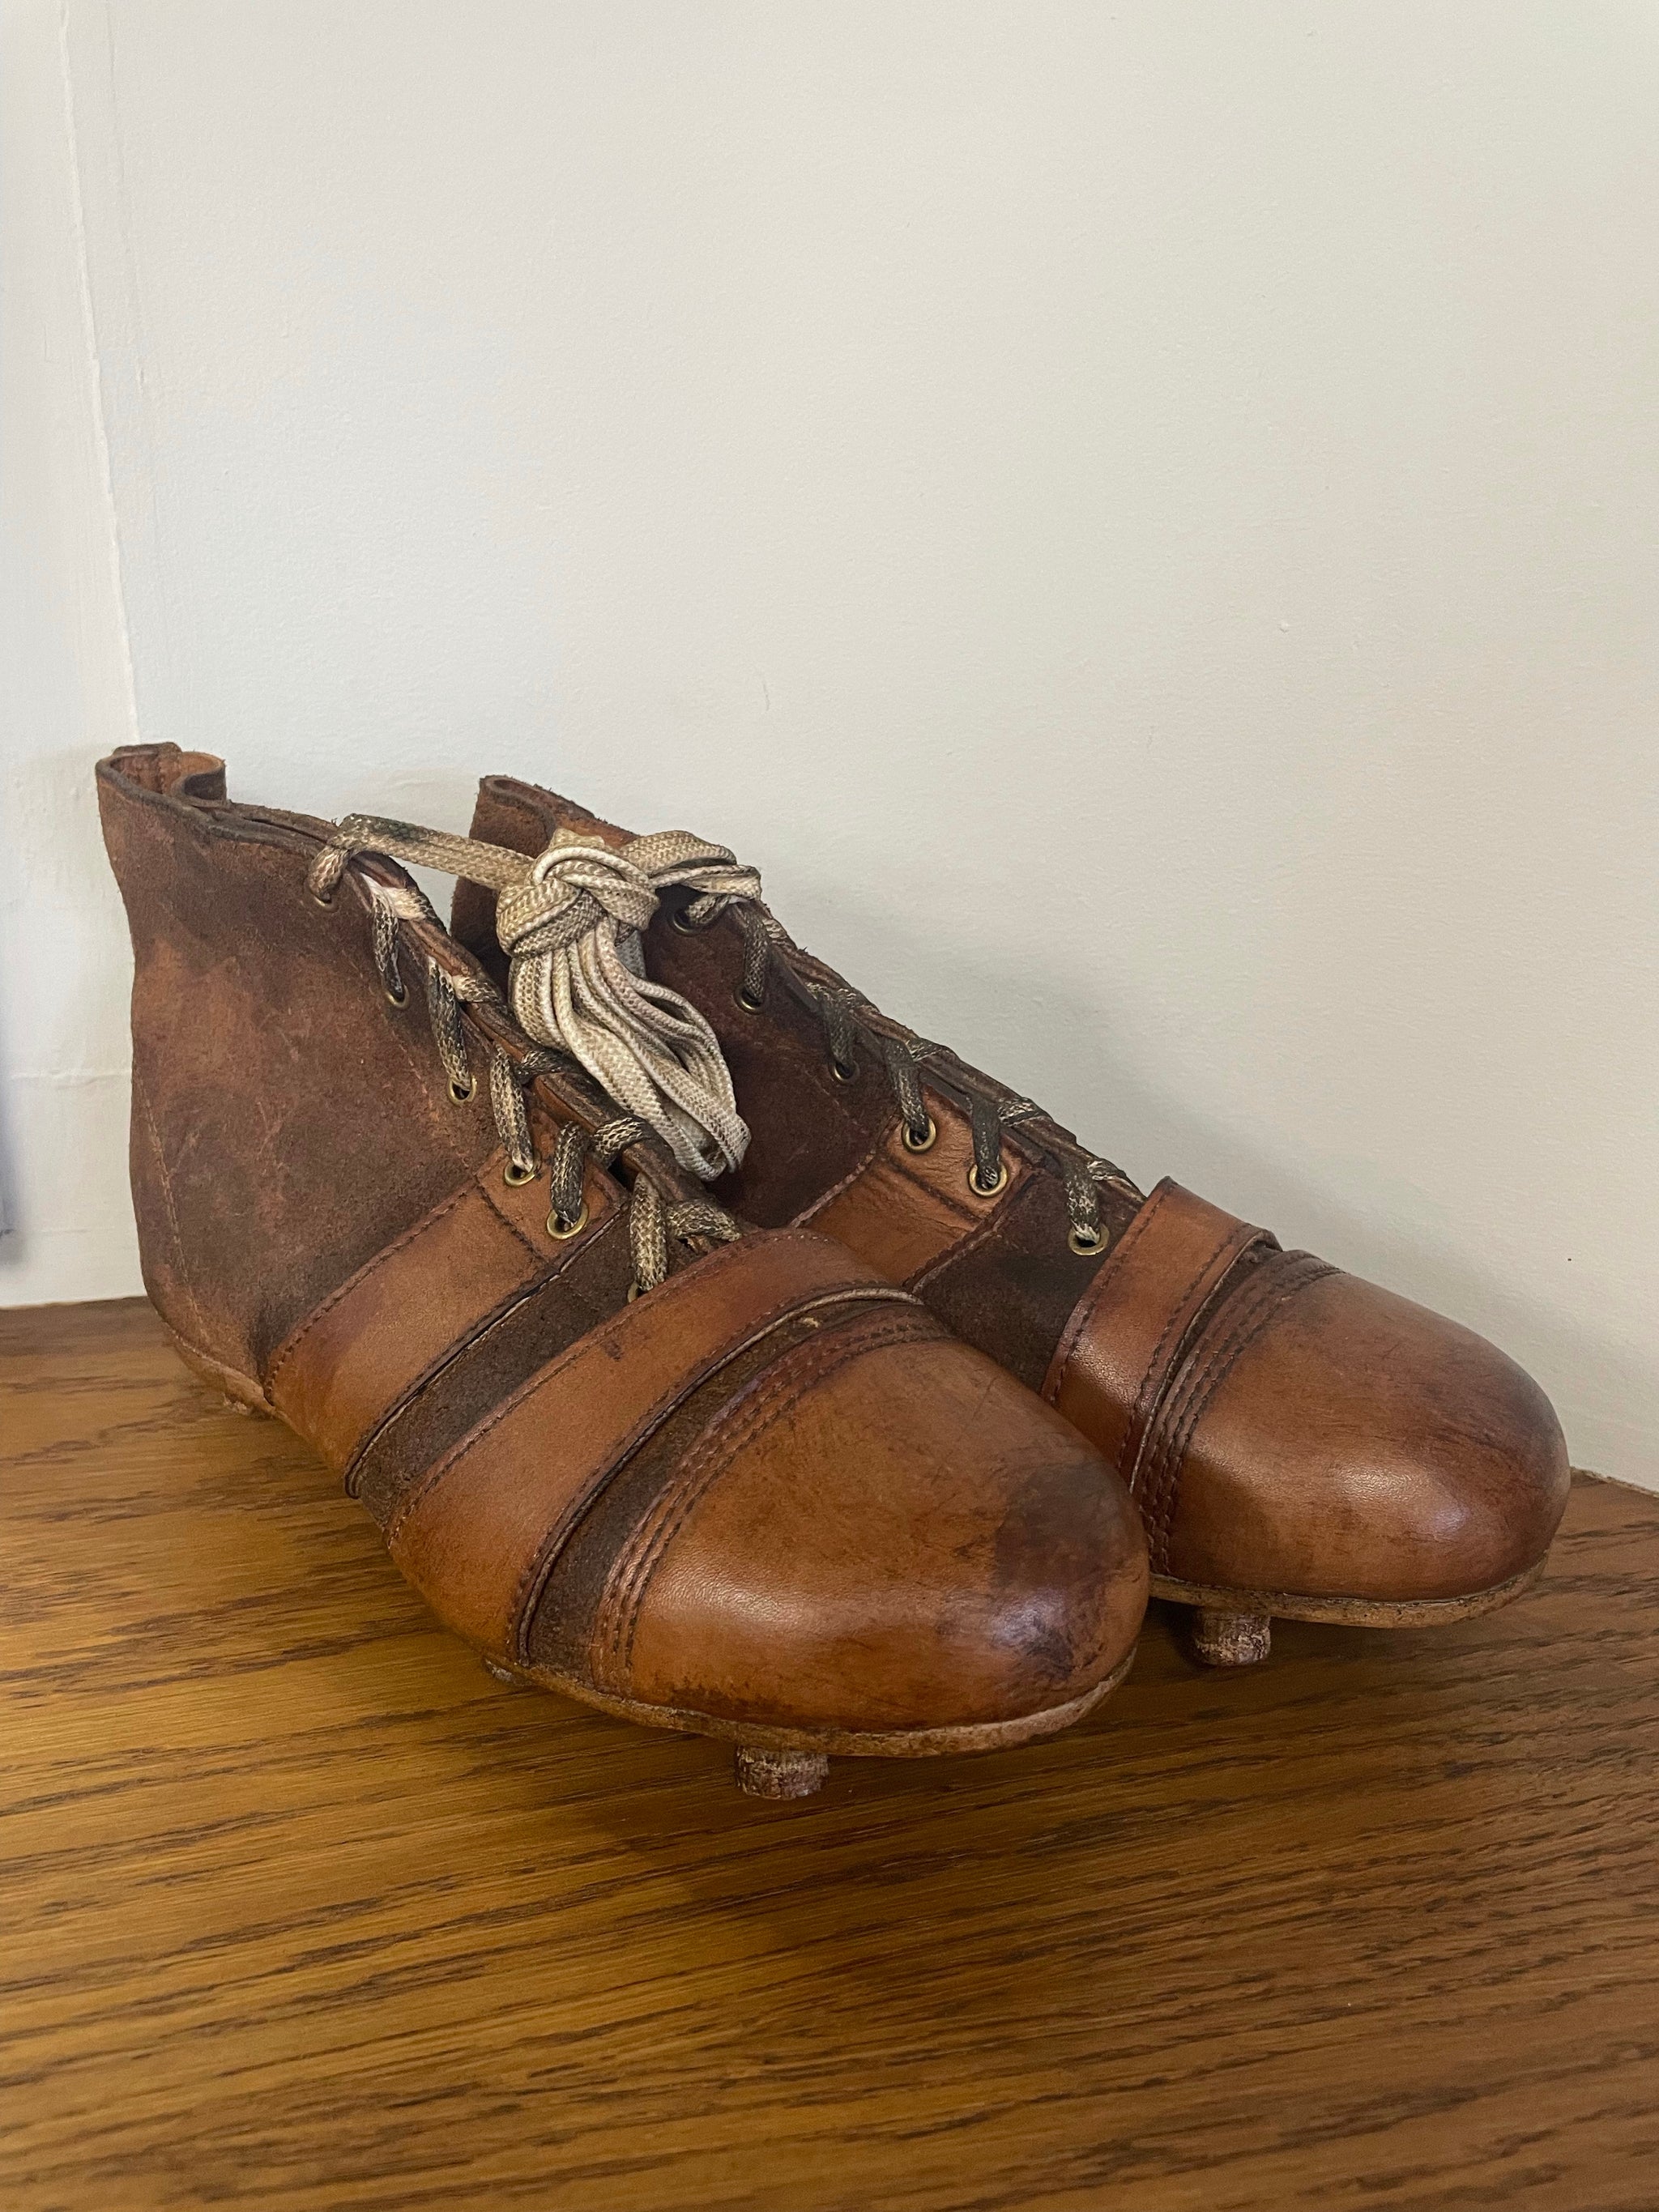 Vintage Style Football Boots